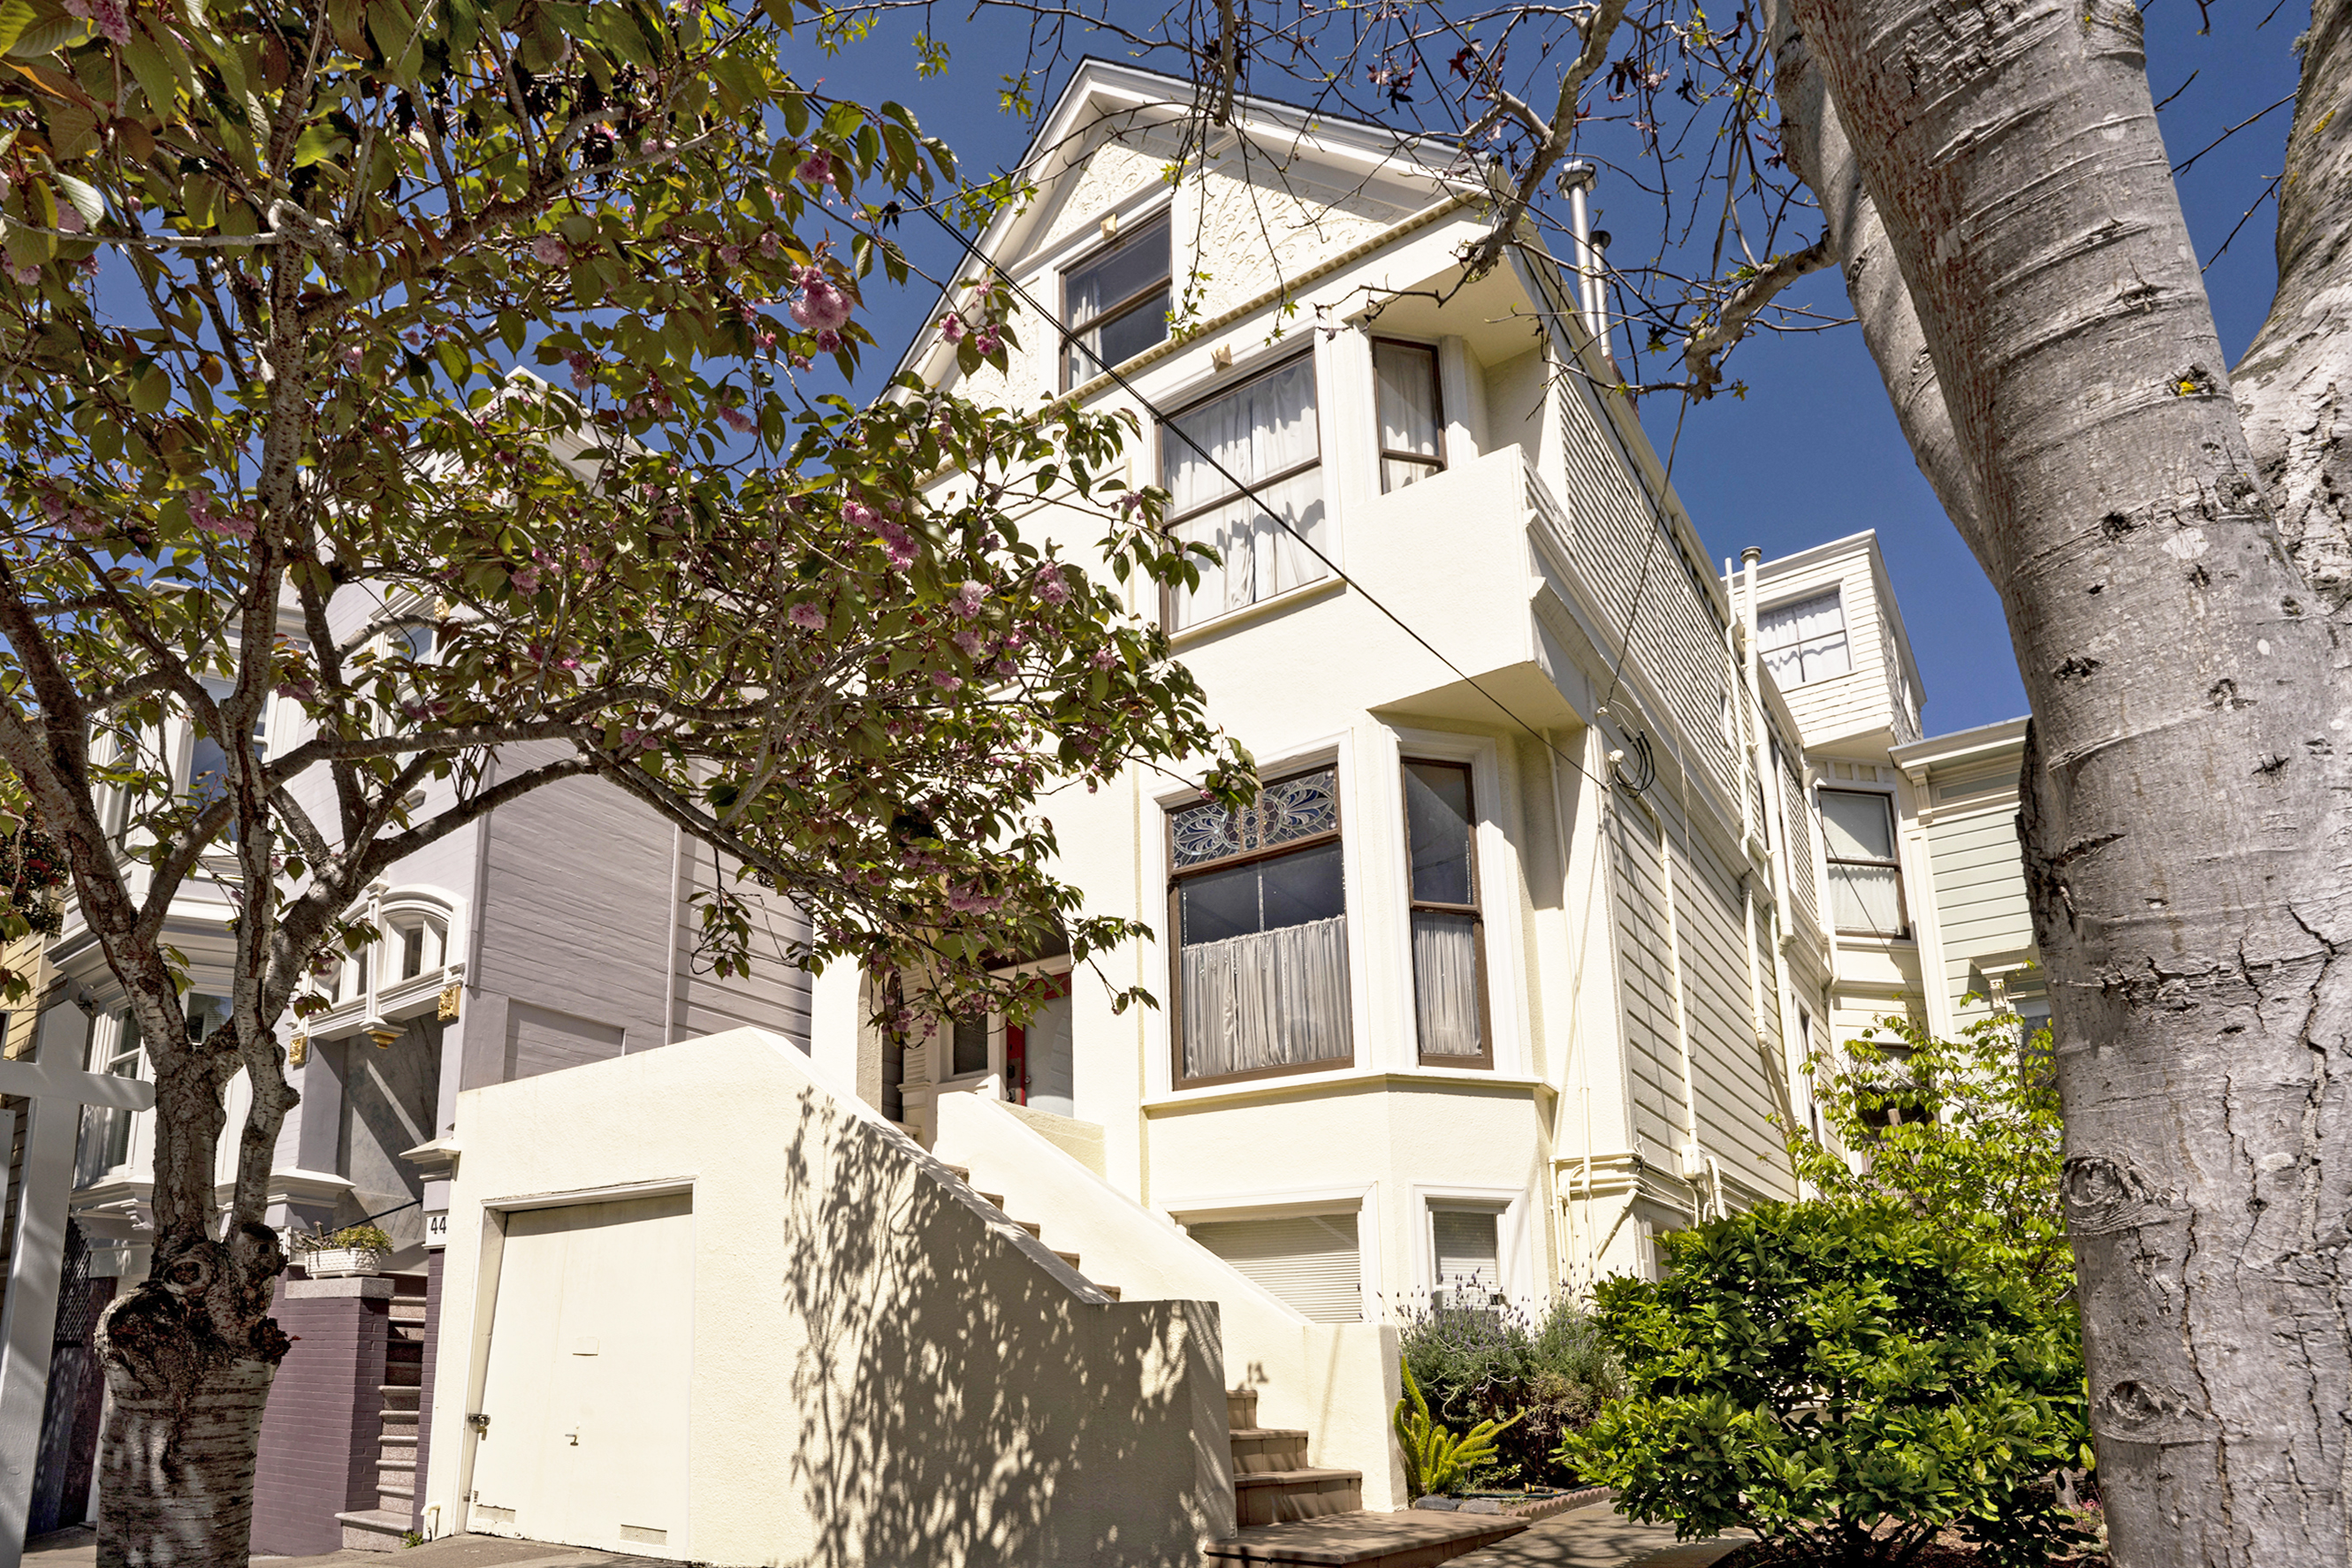 Property Photo: Front exterior of 38 Lyon Street, featuring a light tan facade